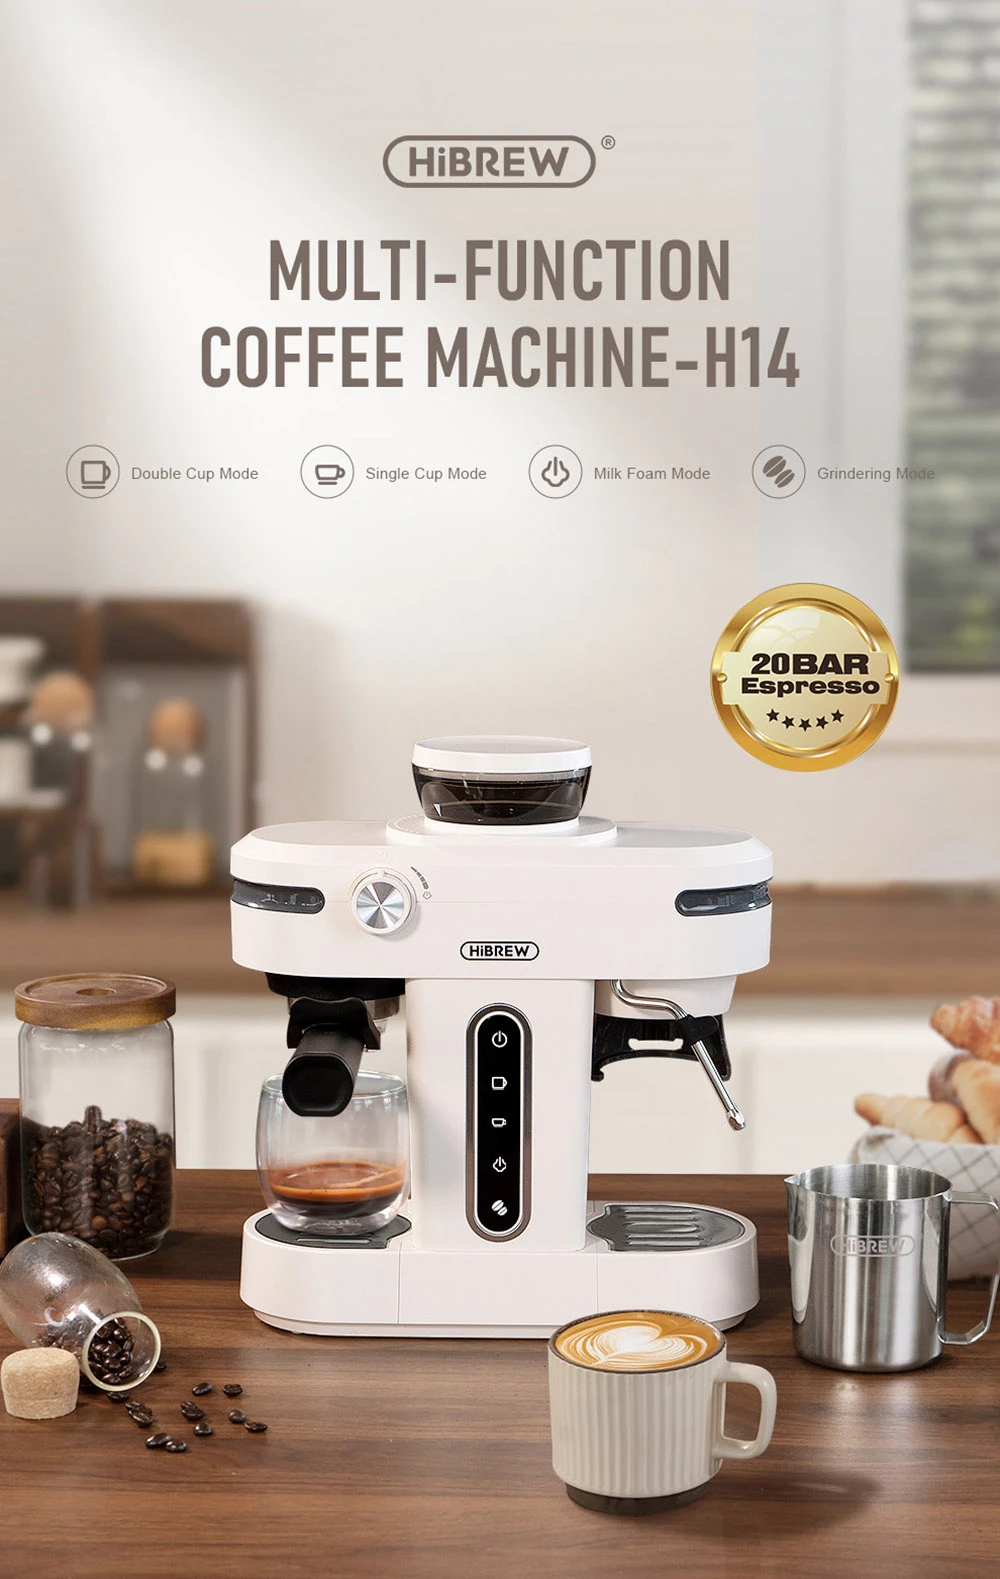 https://img.gkbcdn.com/d/202404/HiBREW-H14-Espresso-Coffee-Machine-Beige-524230-0._p1_.jpg